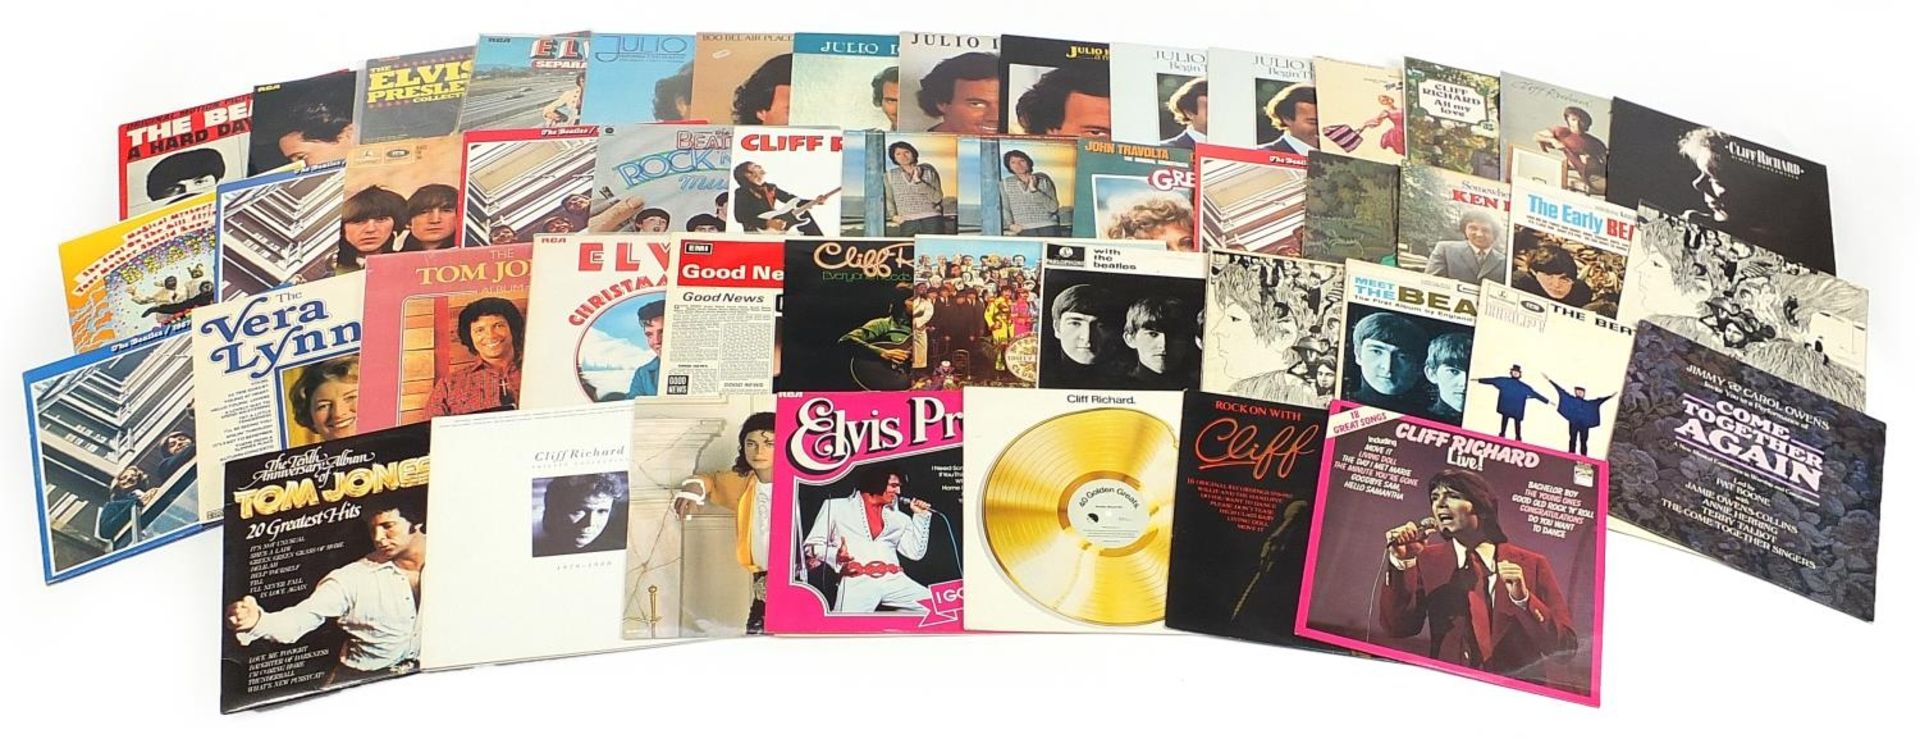 Vinyl LP records including The Beatles, Elvis Presley, Cliff Richard and Tom Jones